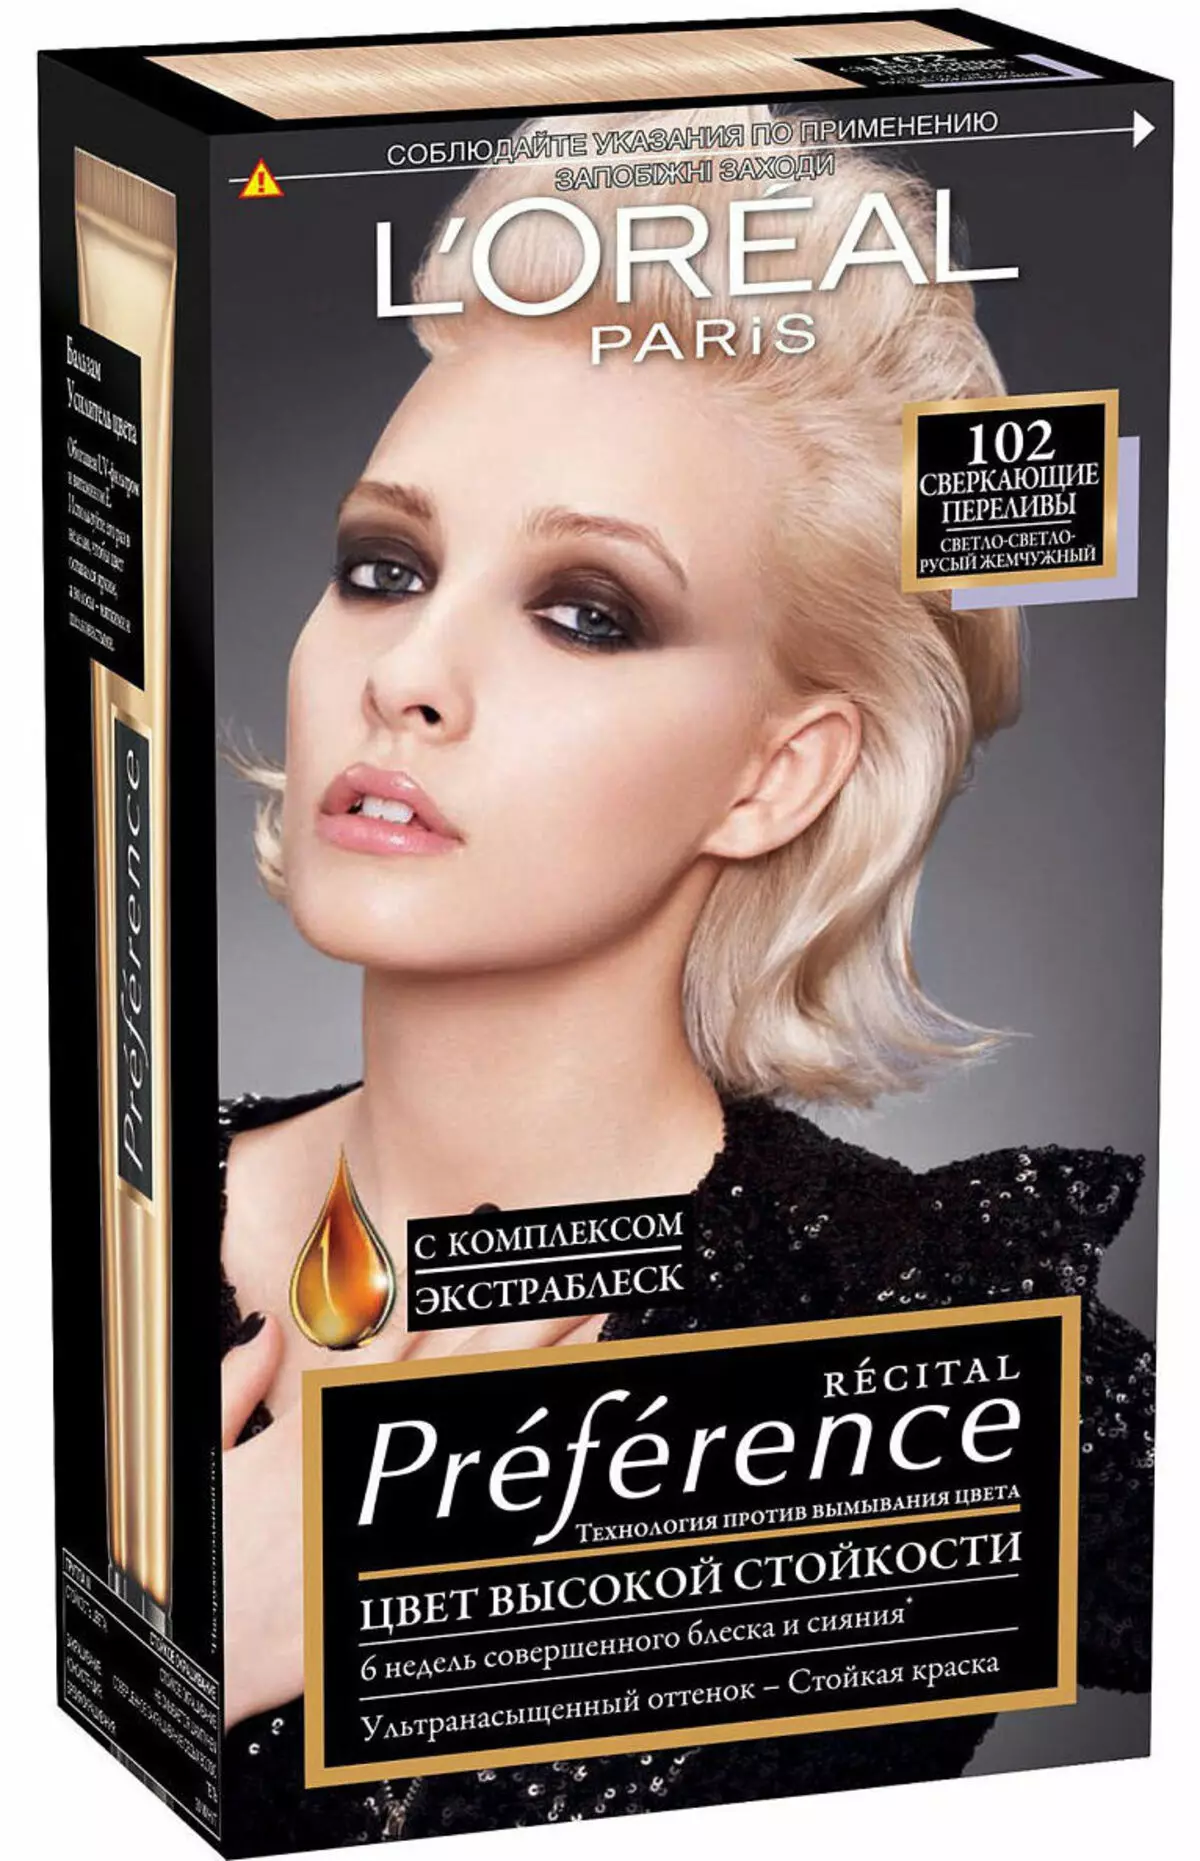 Pintura de cabelo L'Oreal Paris (60 fotos): a paleta de cores e tons de tinta profissional, características da série Colorista e profissional, prodígio e outros, Reviews 5414_10